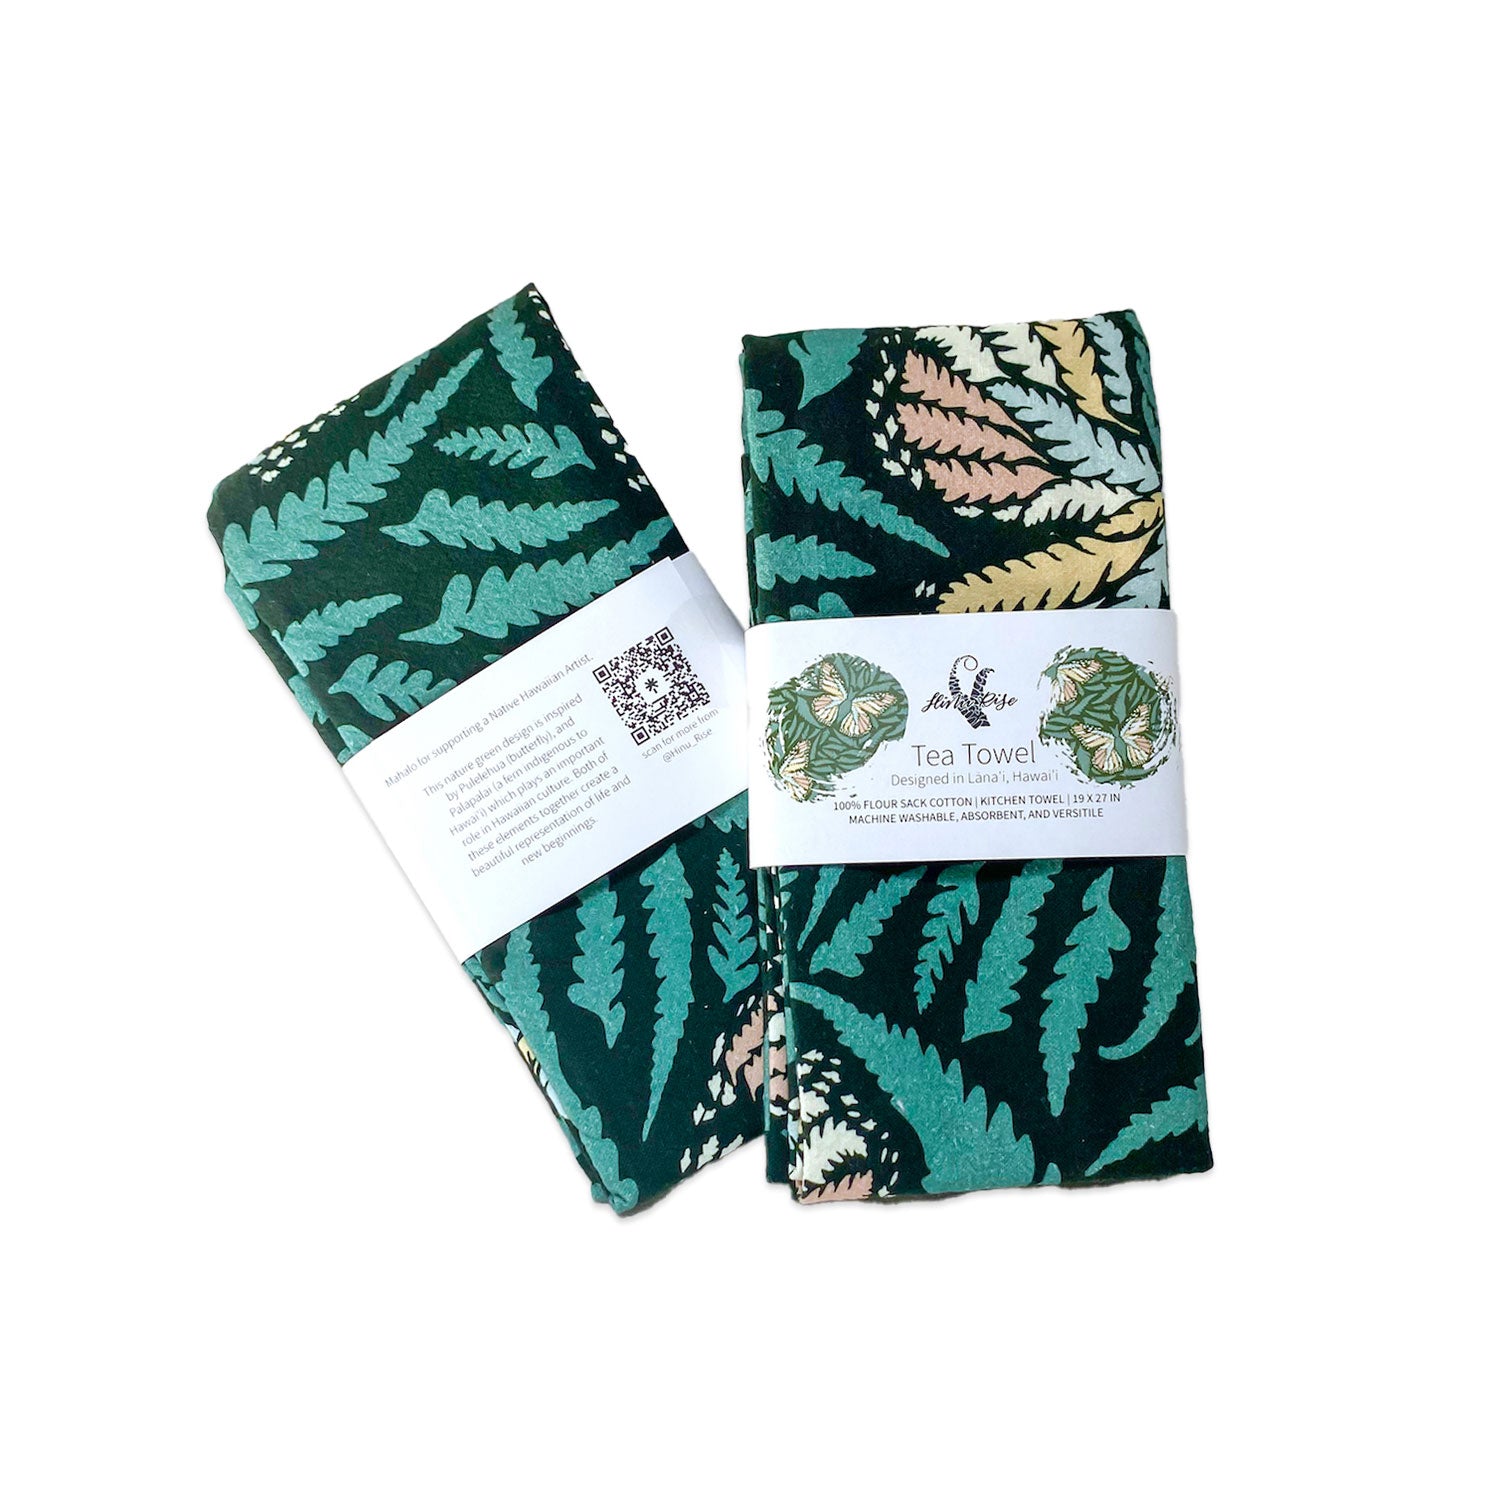 19" x 27" Cotton Flour Sack Tea Towel - Fern Butterfly